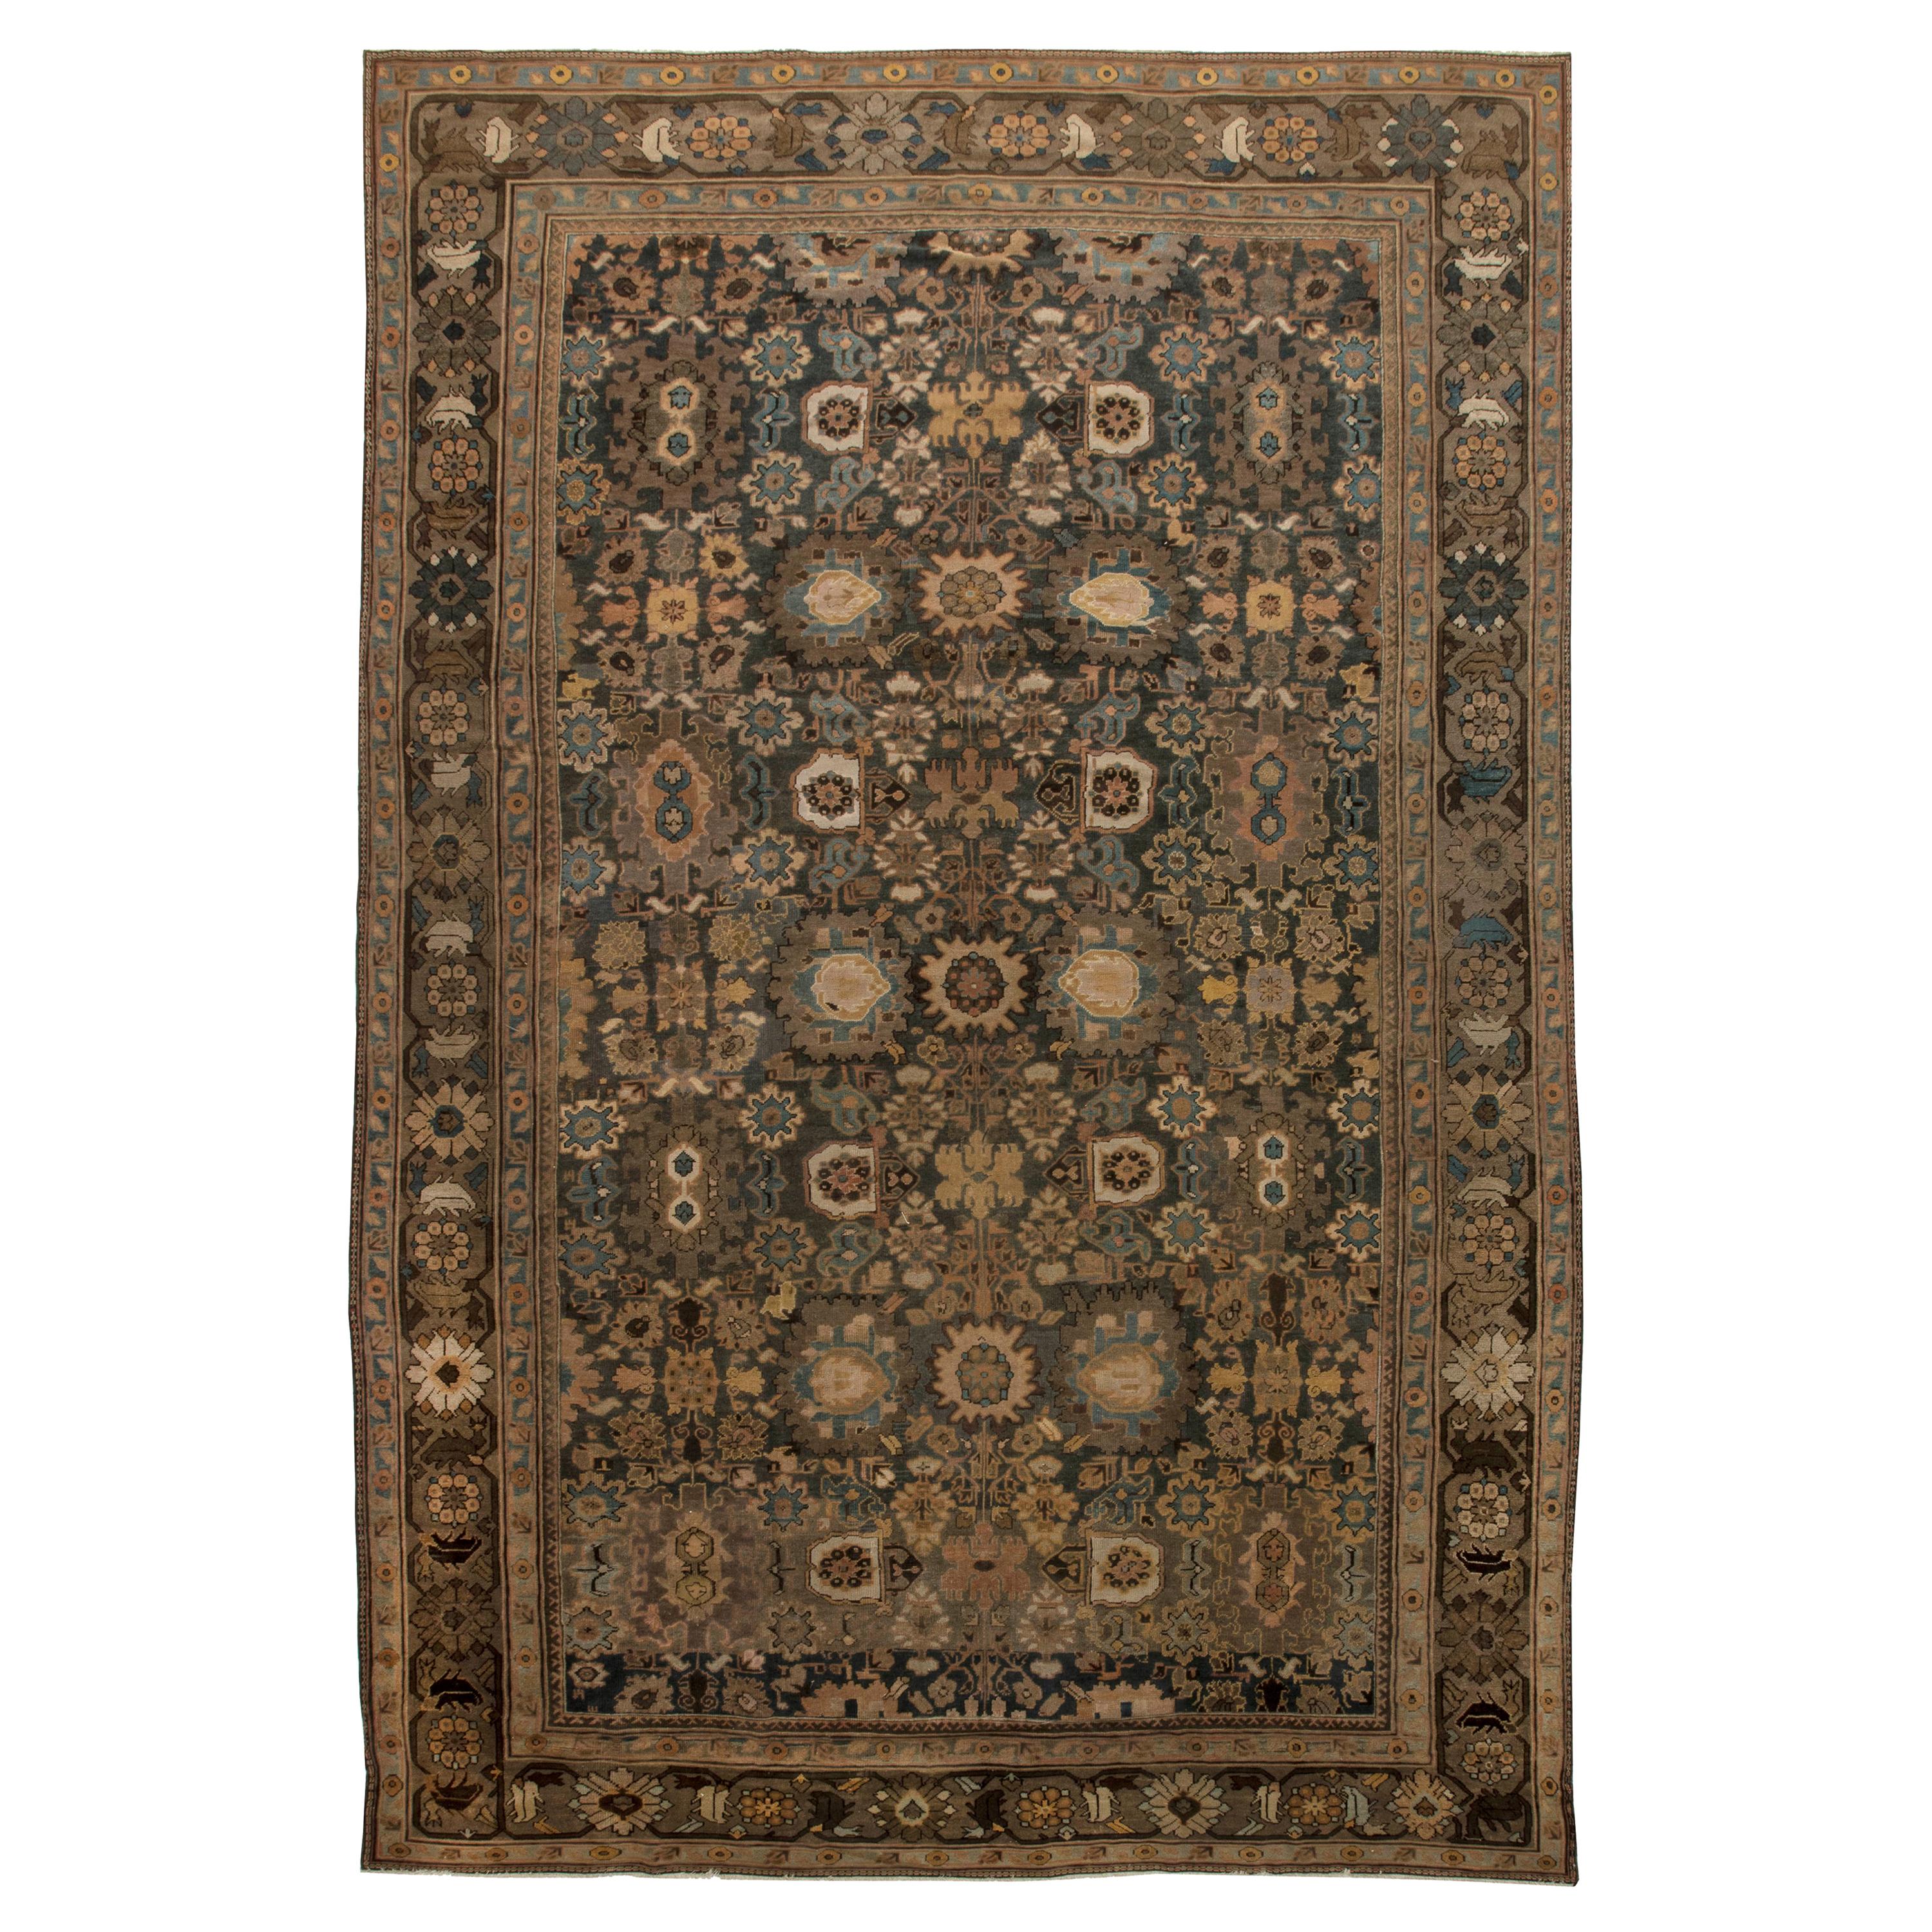 19th Century Persian Sultanabad Handmade Wool Rug